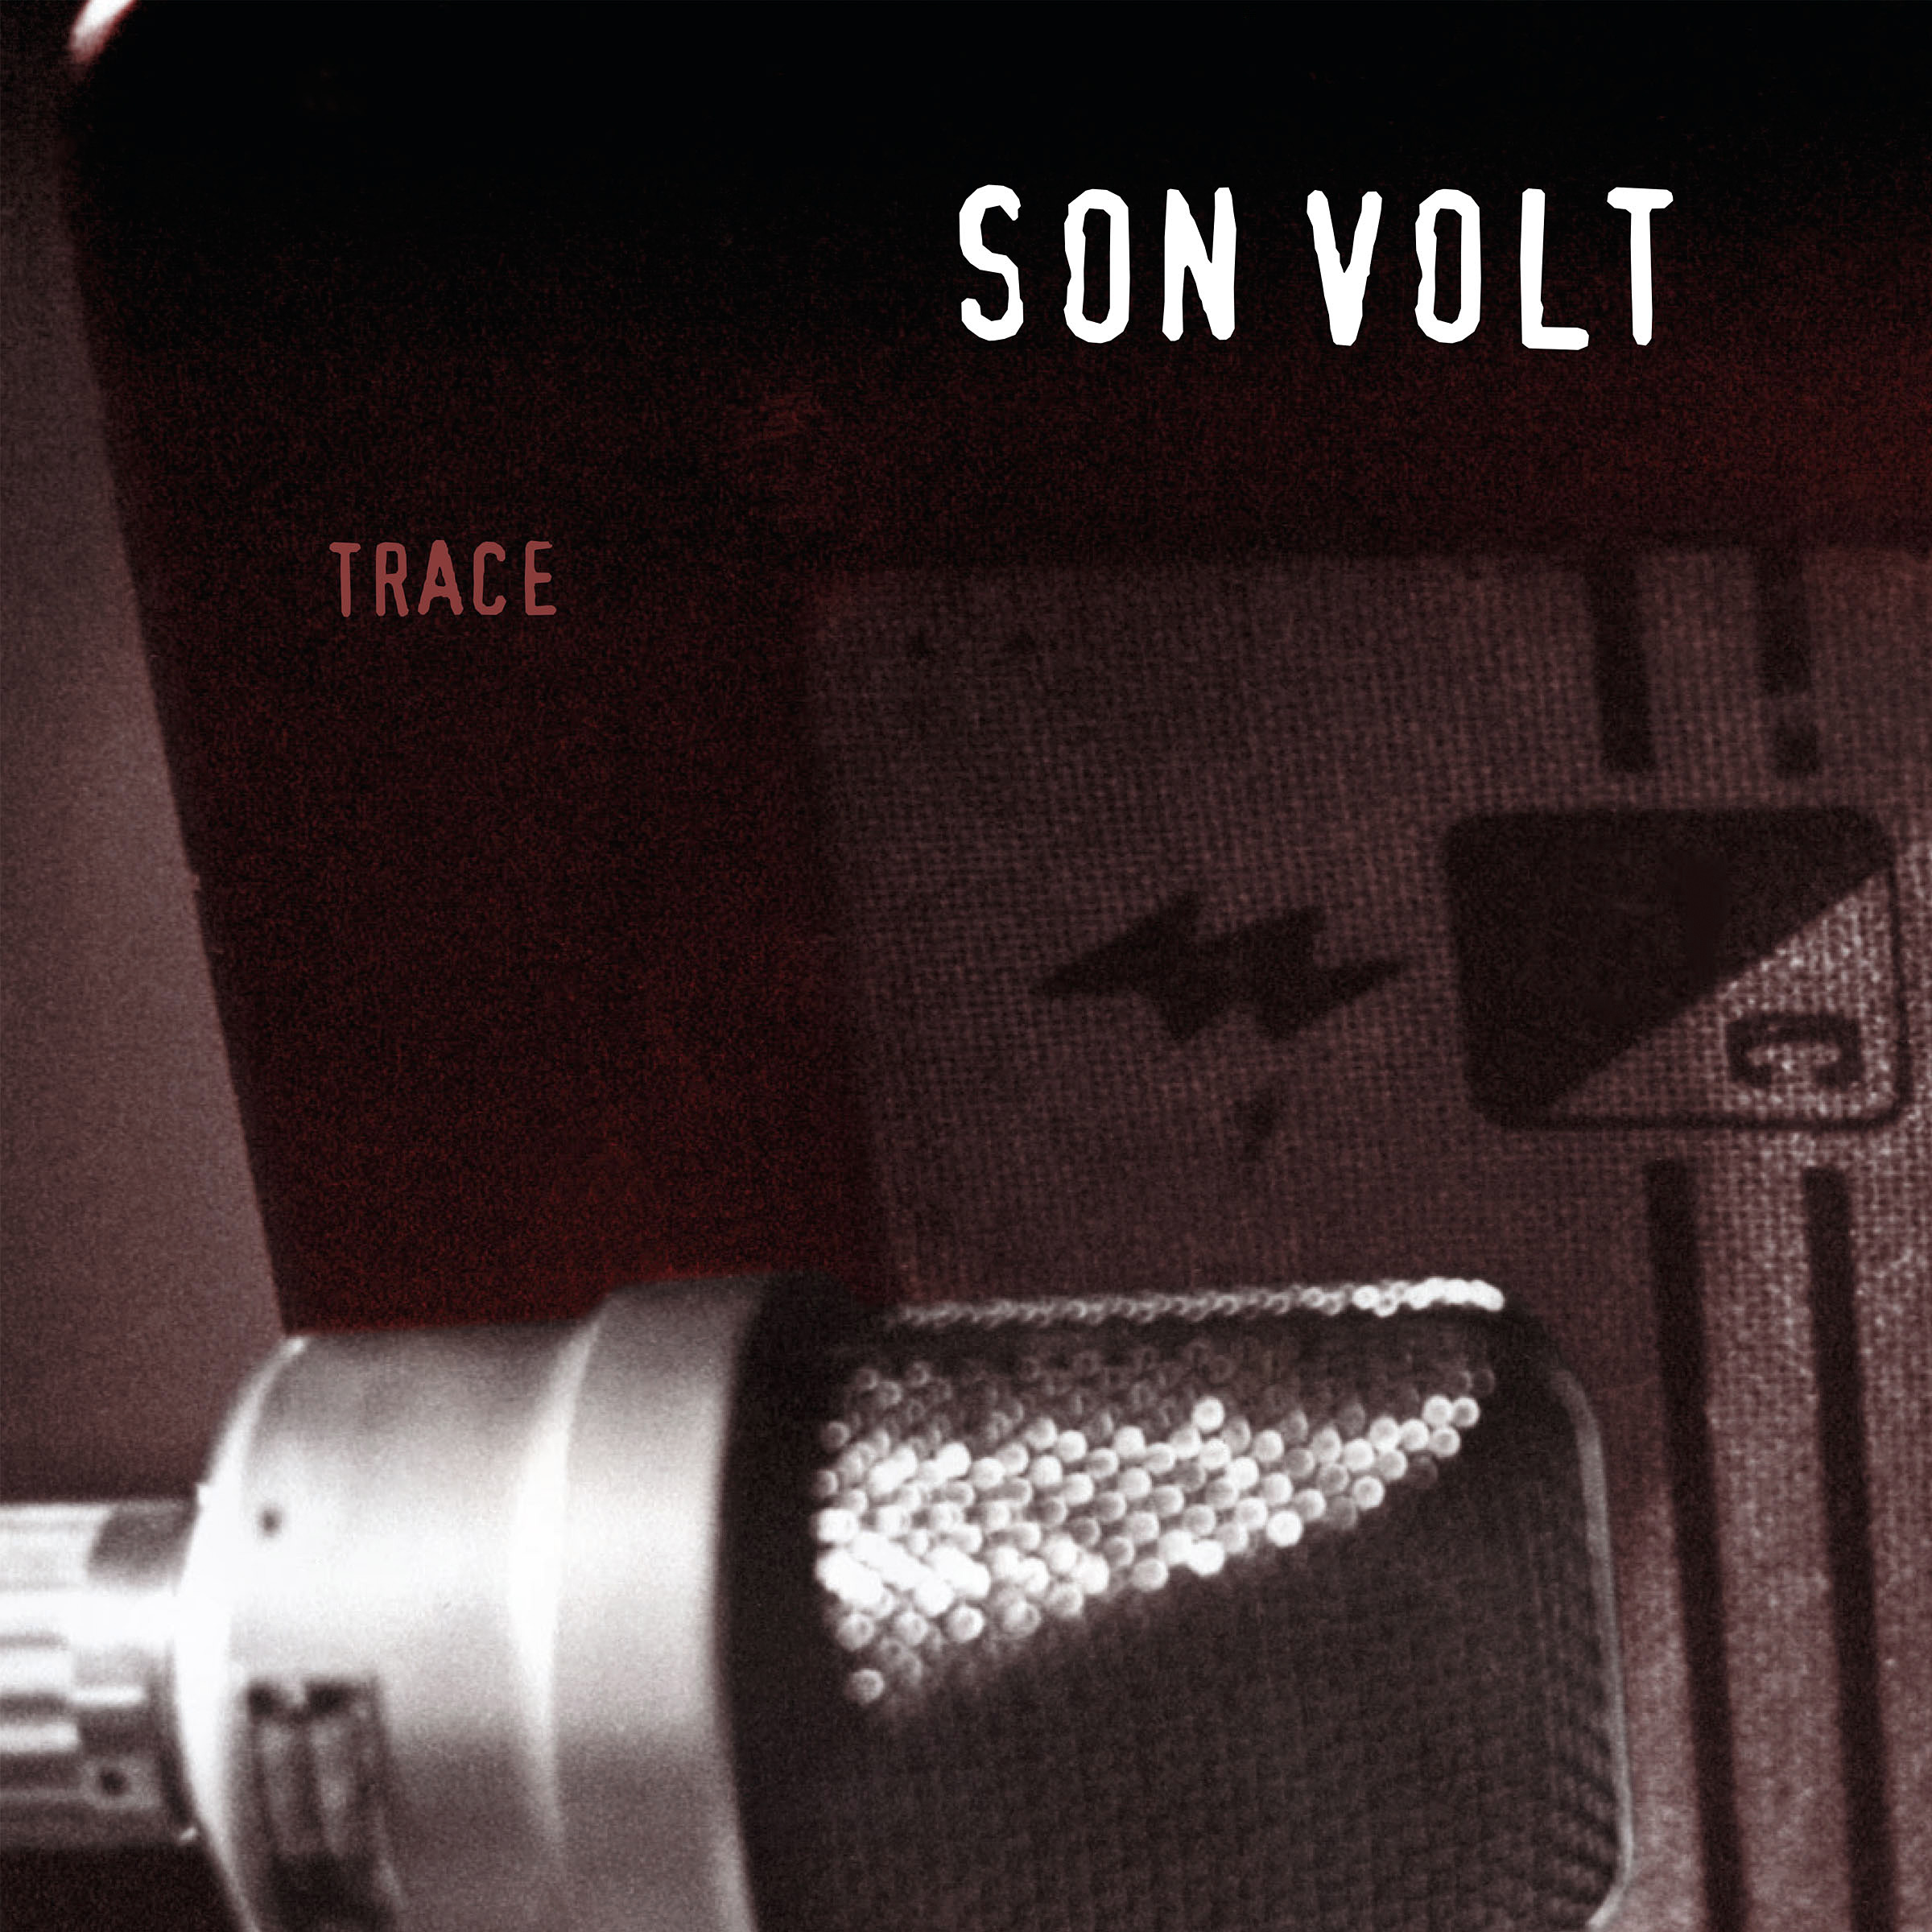 Son Volt - Trace (1995) [Expanded & Remastered 2015] [HDTracks FLAC 24bit/96kHz]